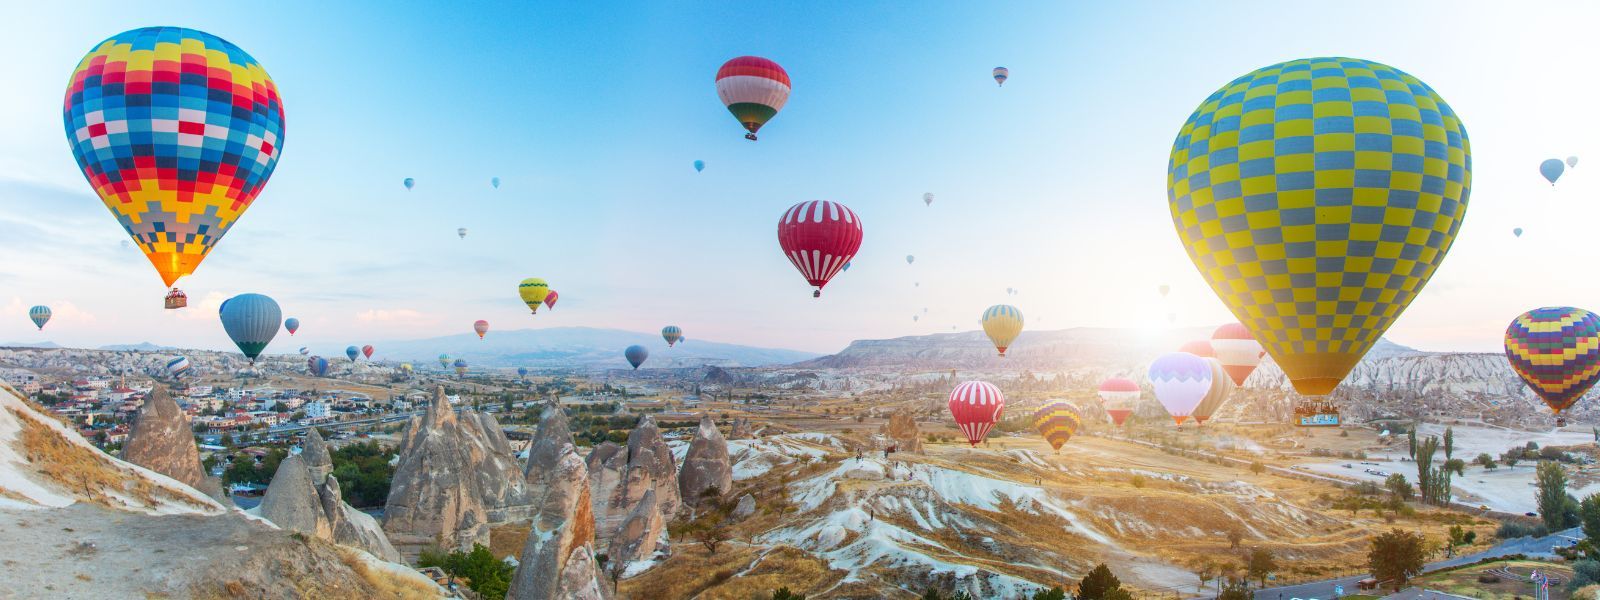 The beginning of a hot air balloon festival in Cappadocia Turkey